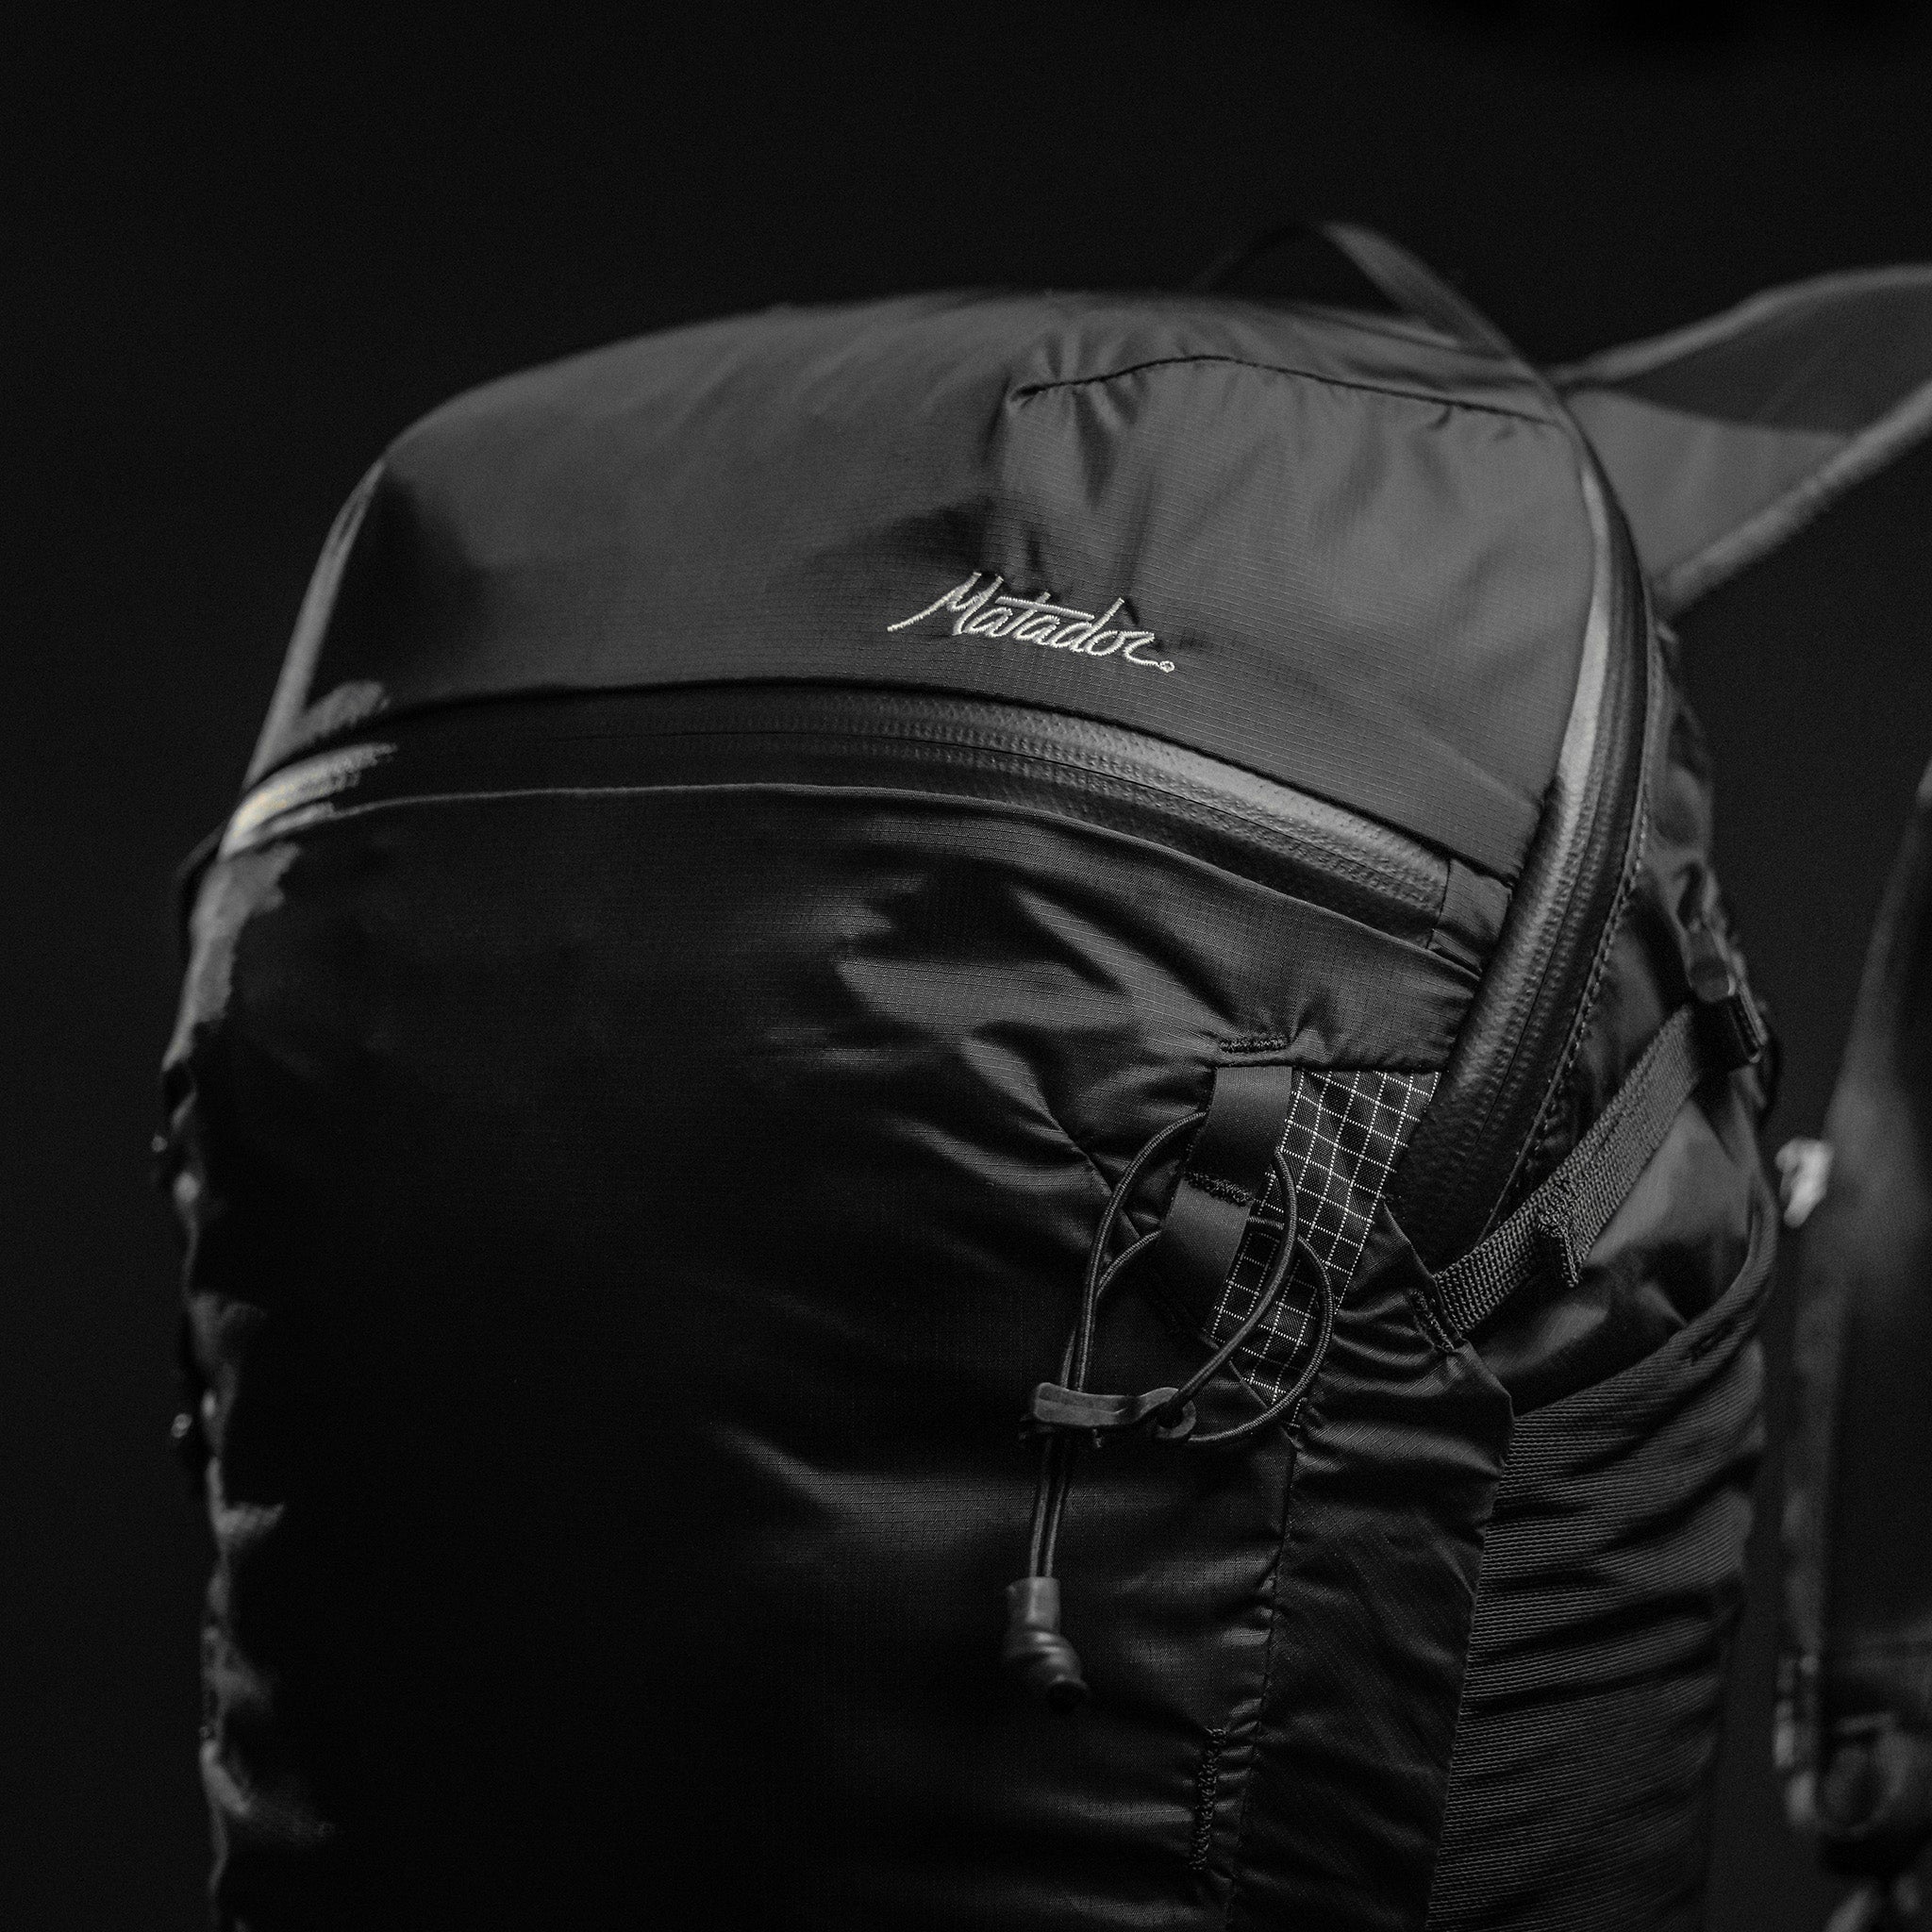 Matador Freefly16 Packable Backpack